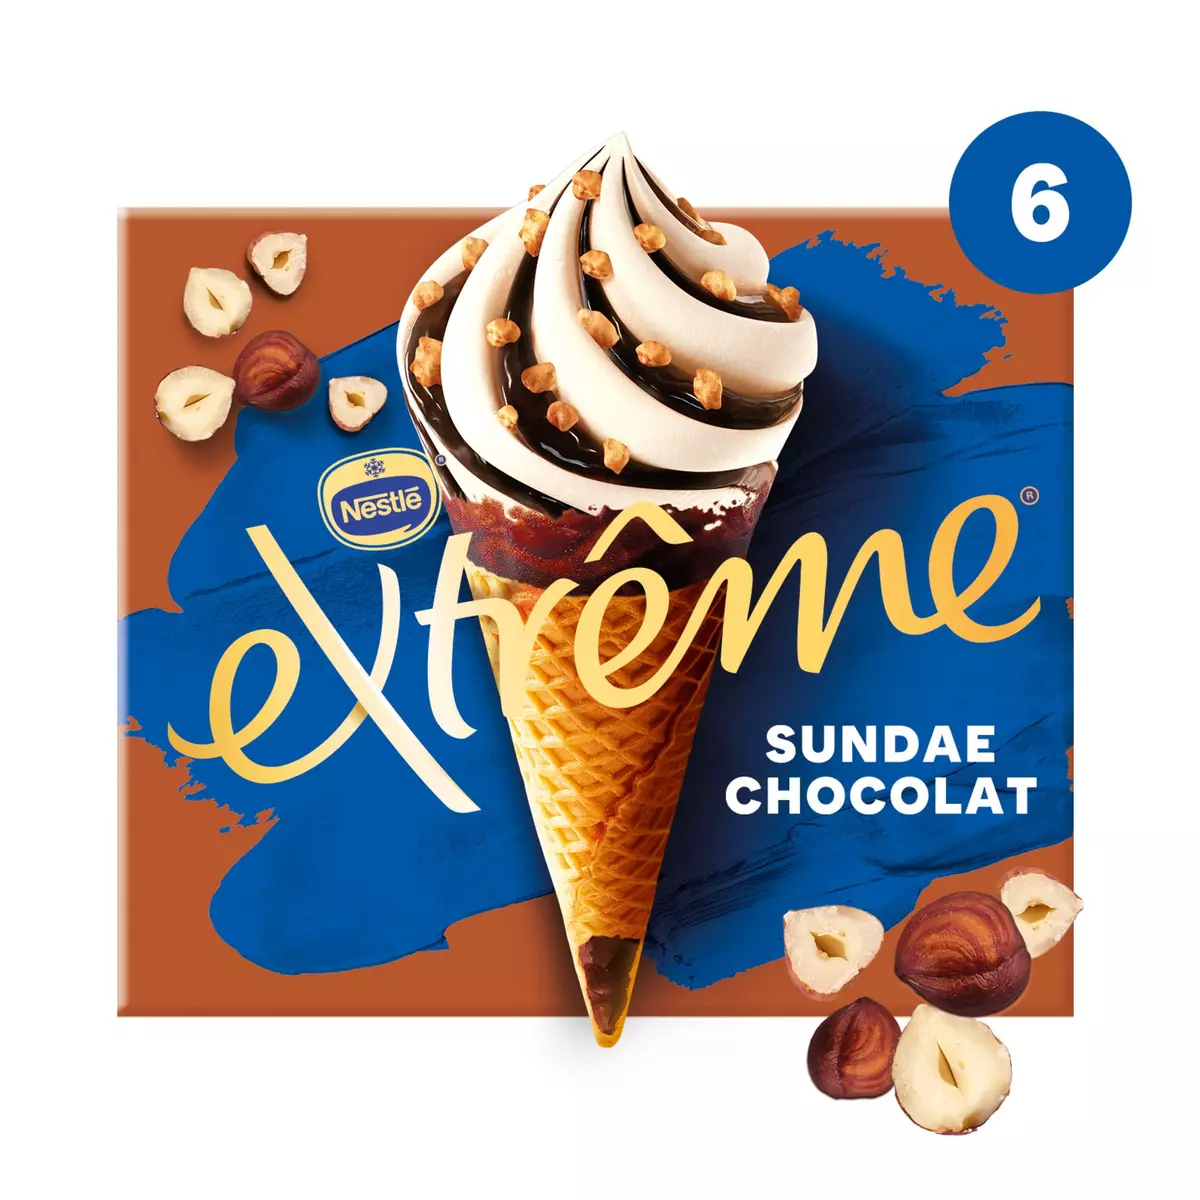 EXTREME Cônes glacés sundae chocolat fondant 6 pièces 396g